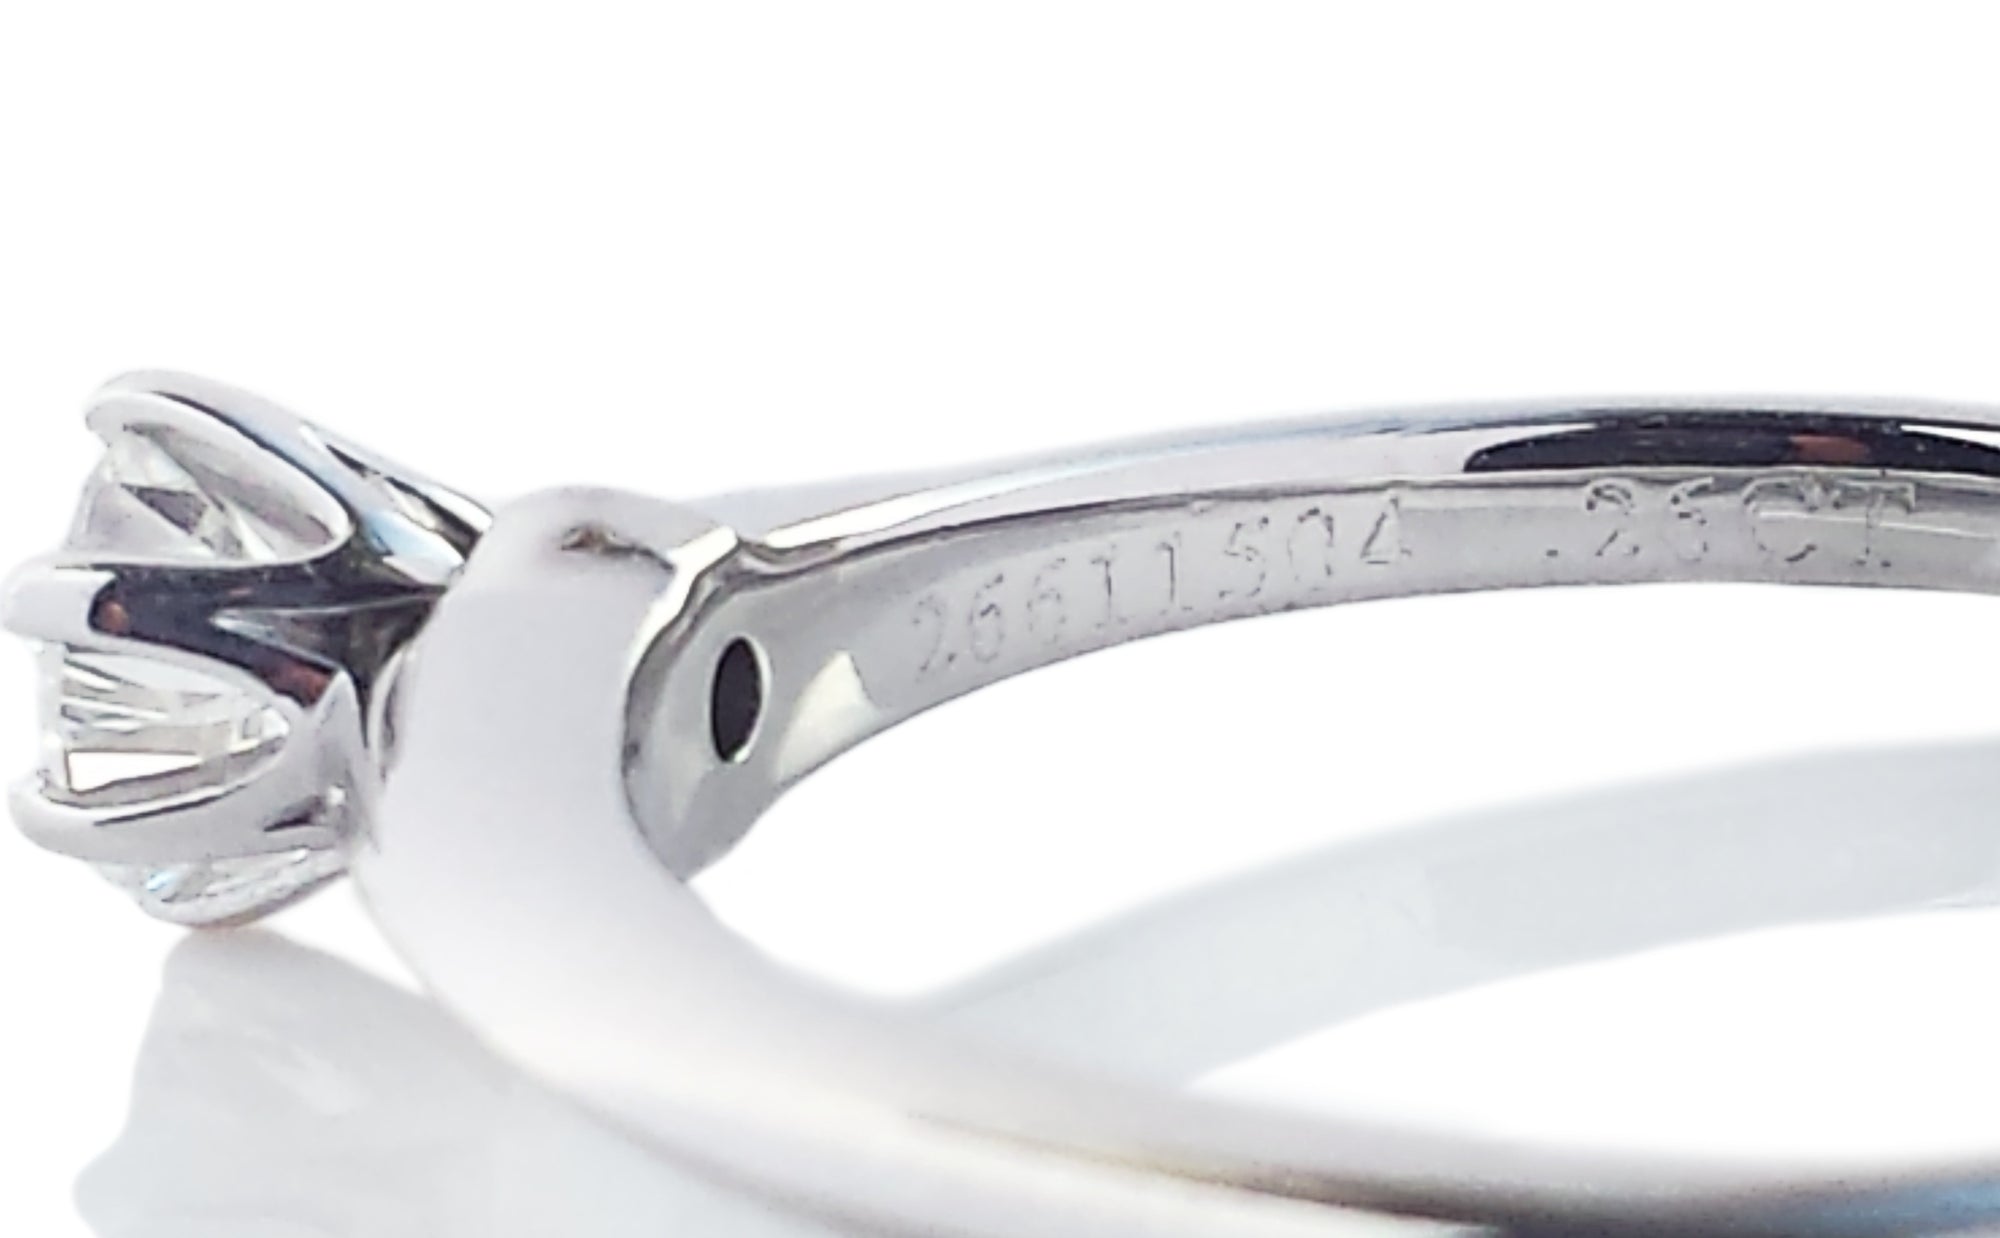 Tiffany & Co. 0.26ct F/VS2 Round Brilliant Cut Diamond Engagement Ring